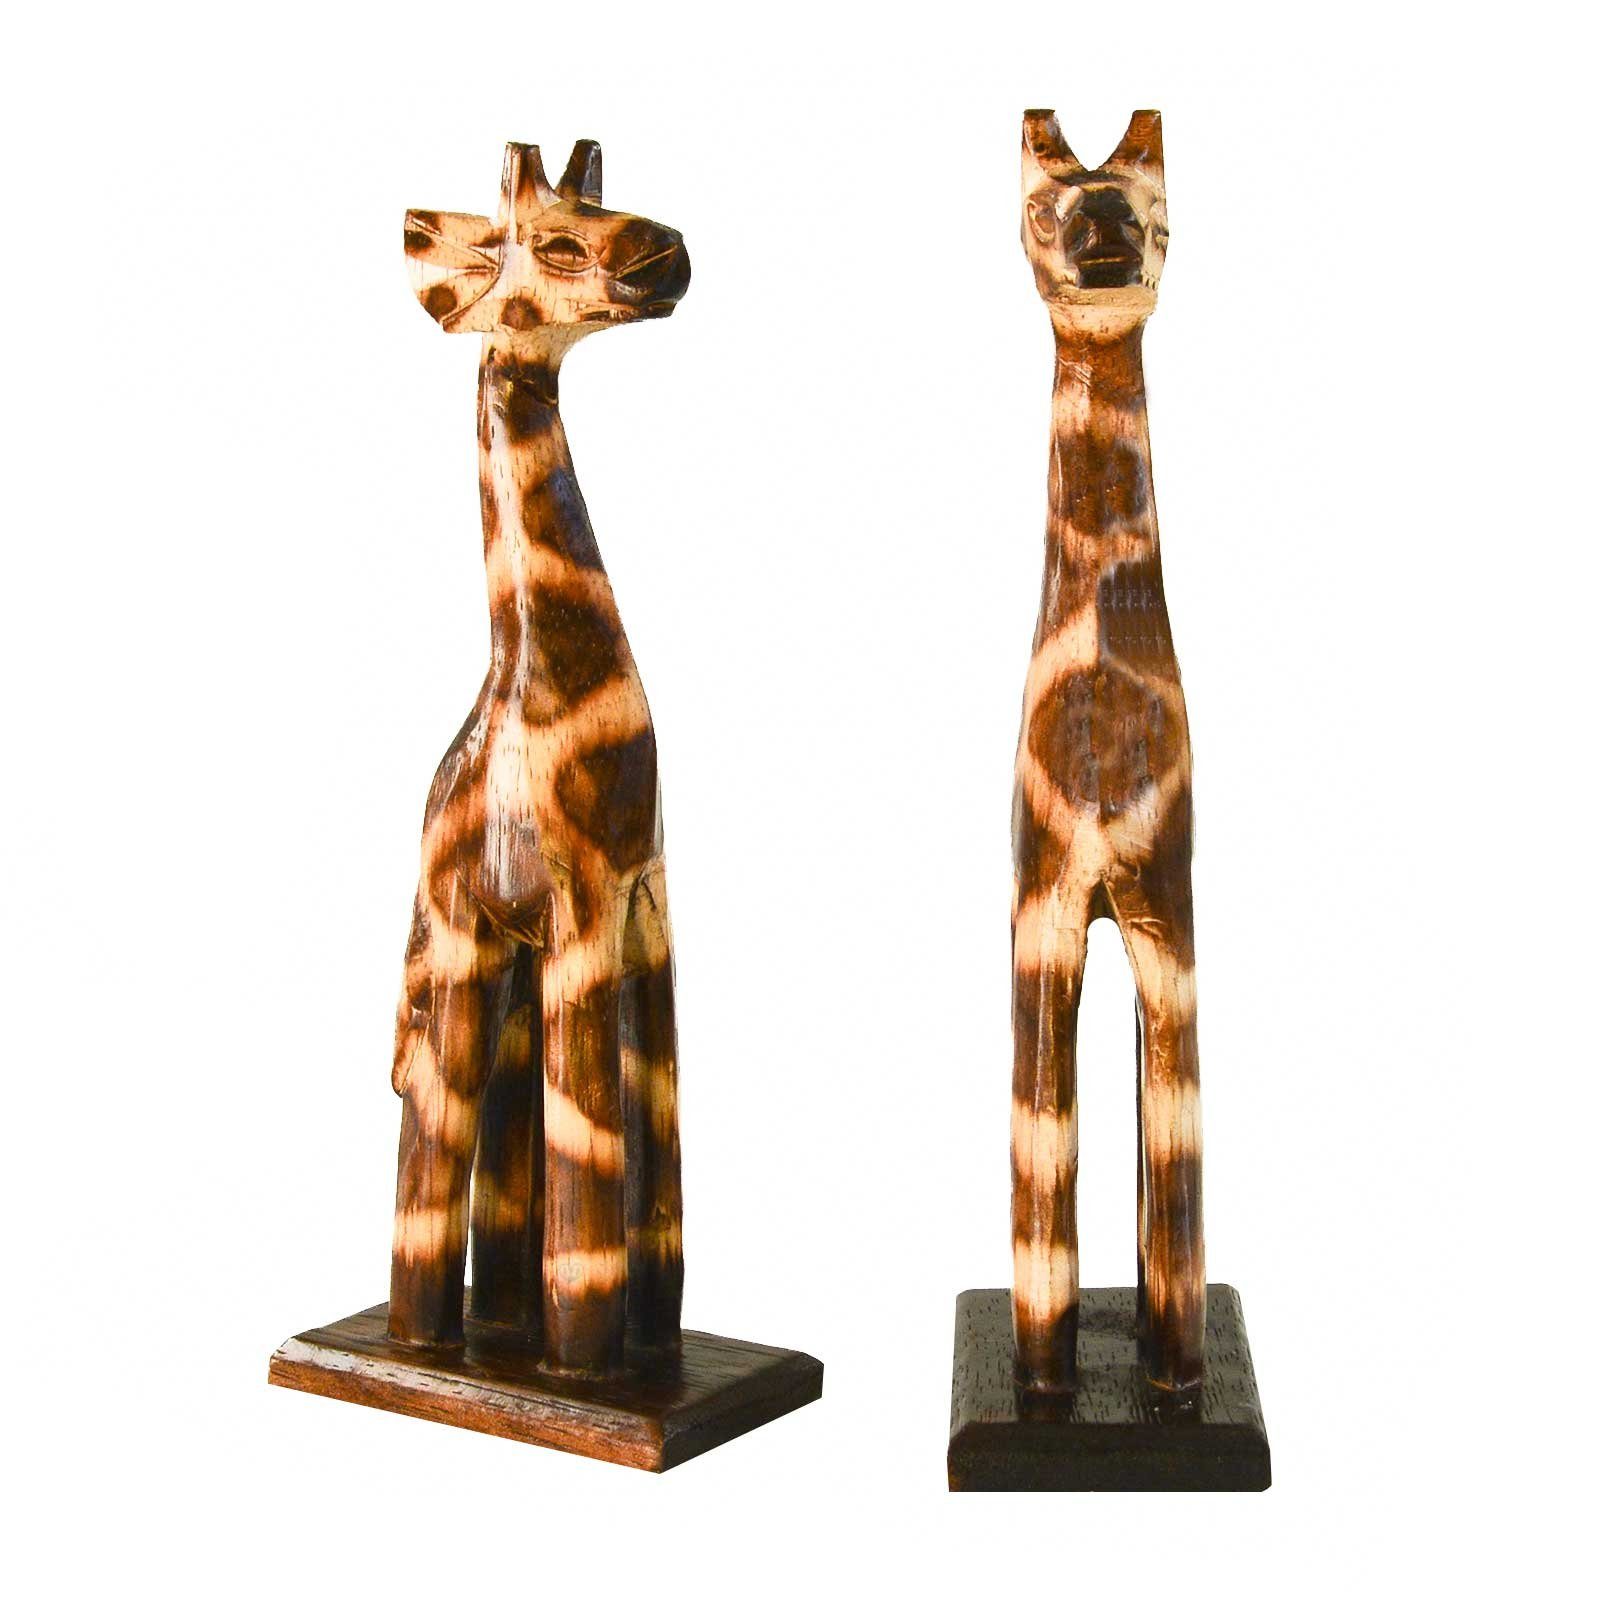 Giraffe maDDma 1 cm 20 20 aus Tierfigur Grösse: Giraffe - ca. cm, Holz, Deko-Giraffe,